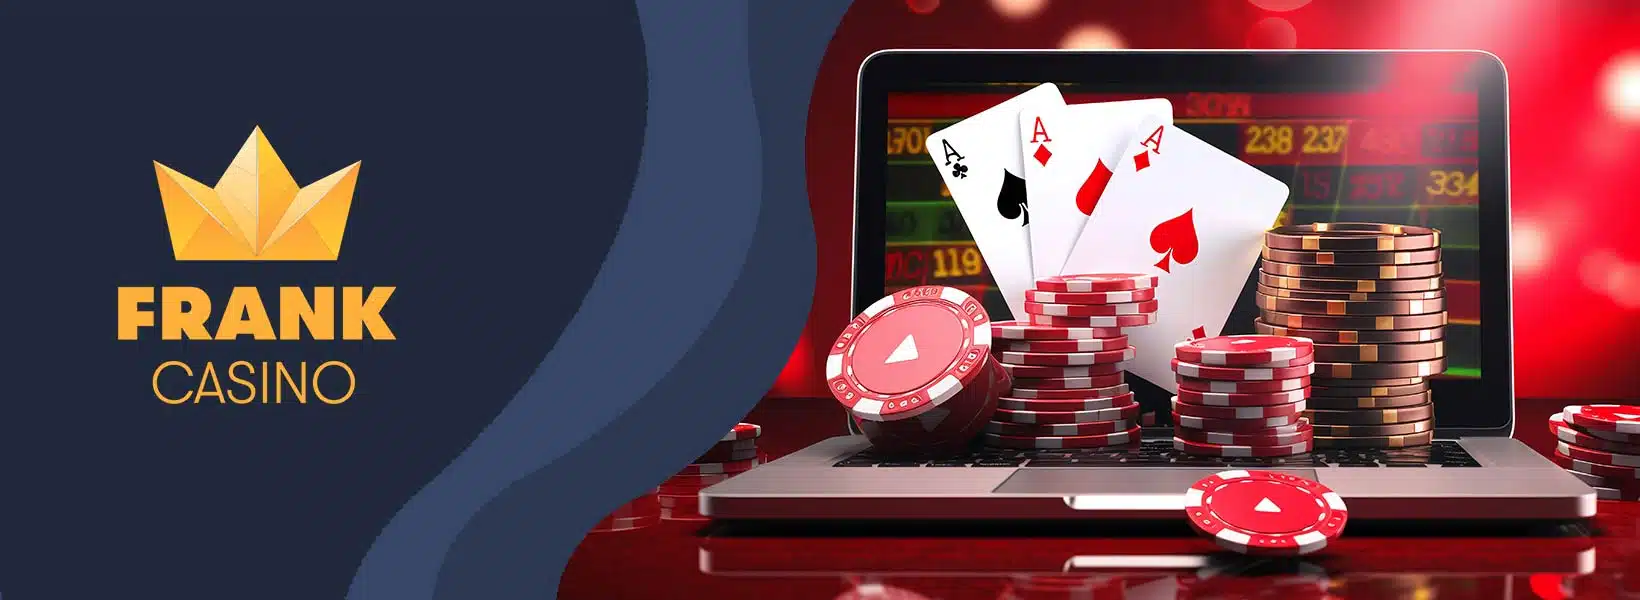 videopoker frank casino